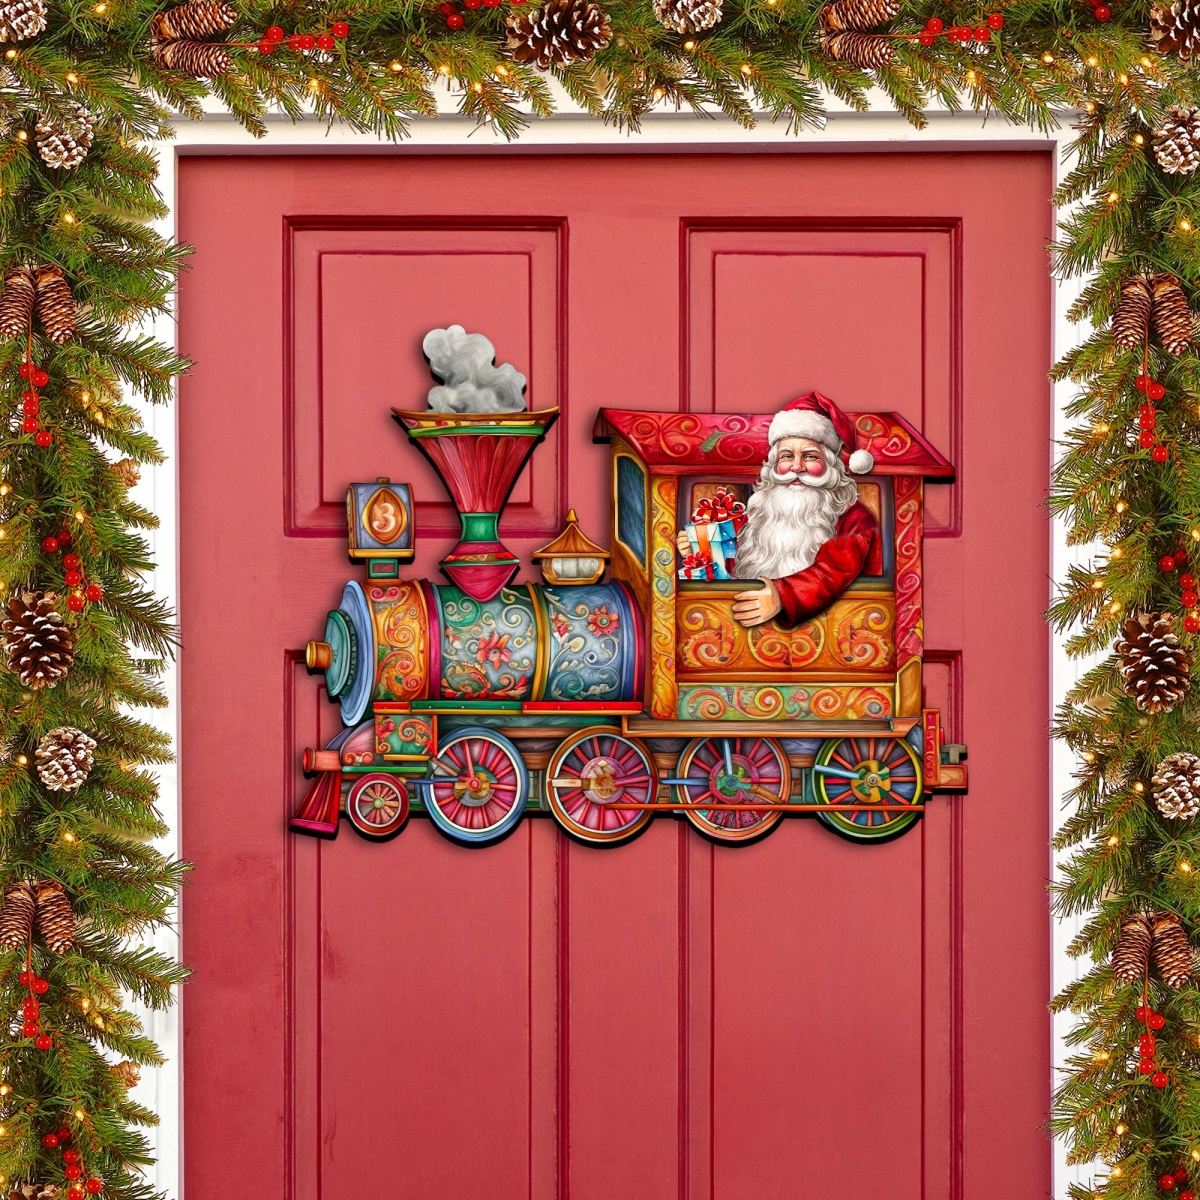 Designocracy 8611090H 24 x 18 in. Santas Train Holiday Christmas Santa Snowman Door Decor